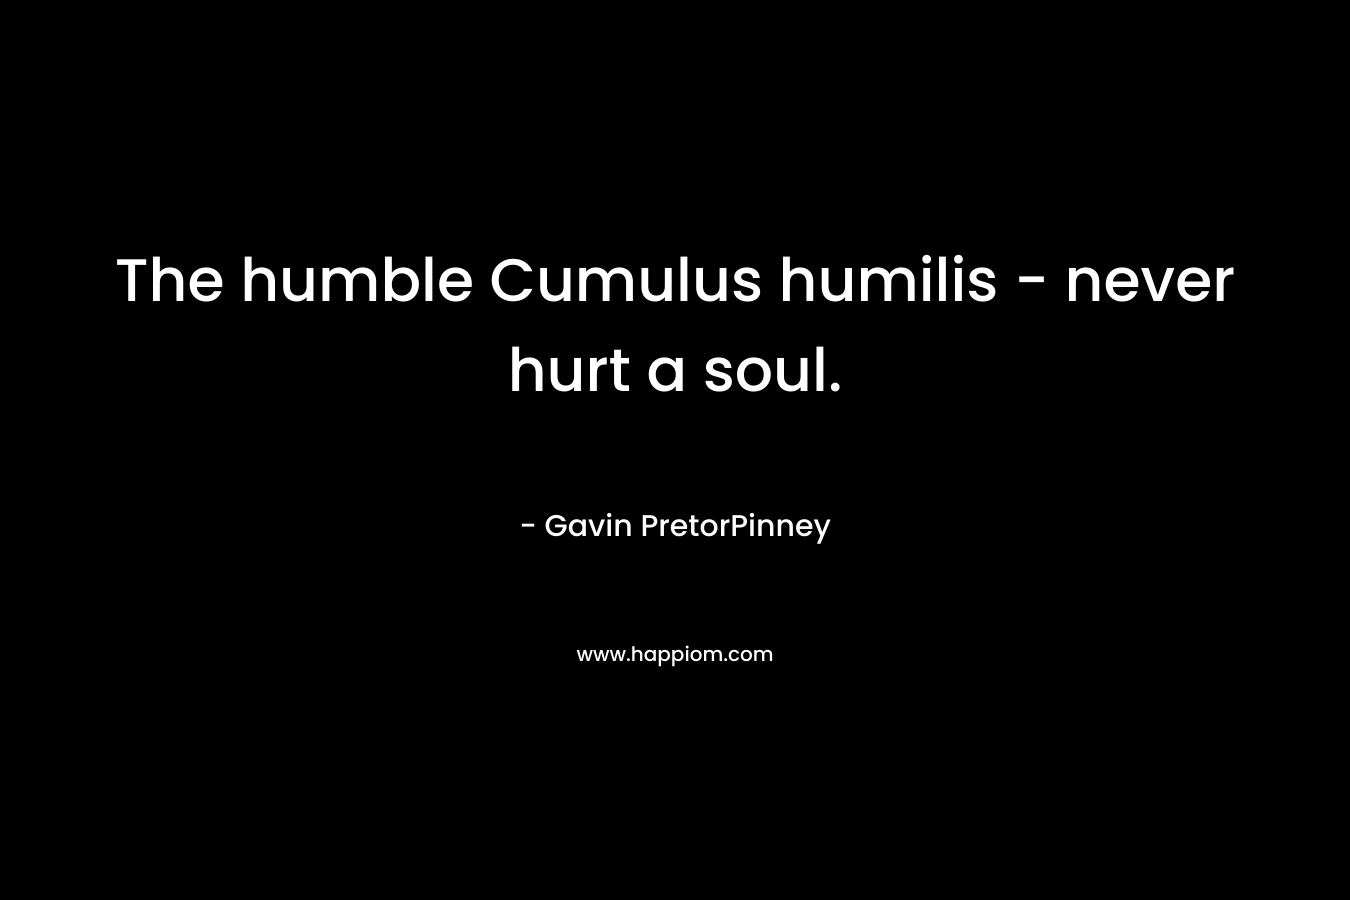 The humble Cumulus humilis - never hurt a soul.